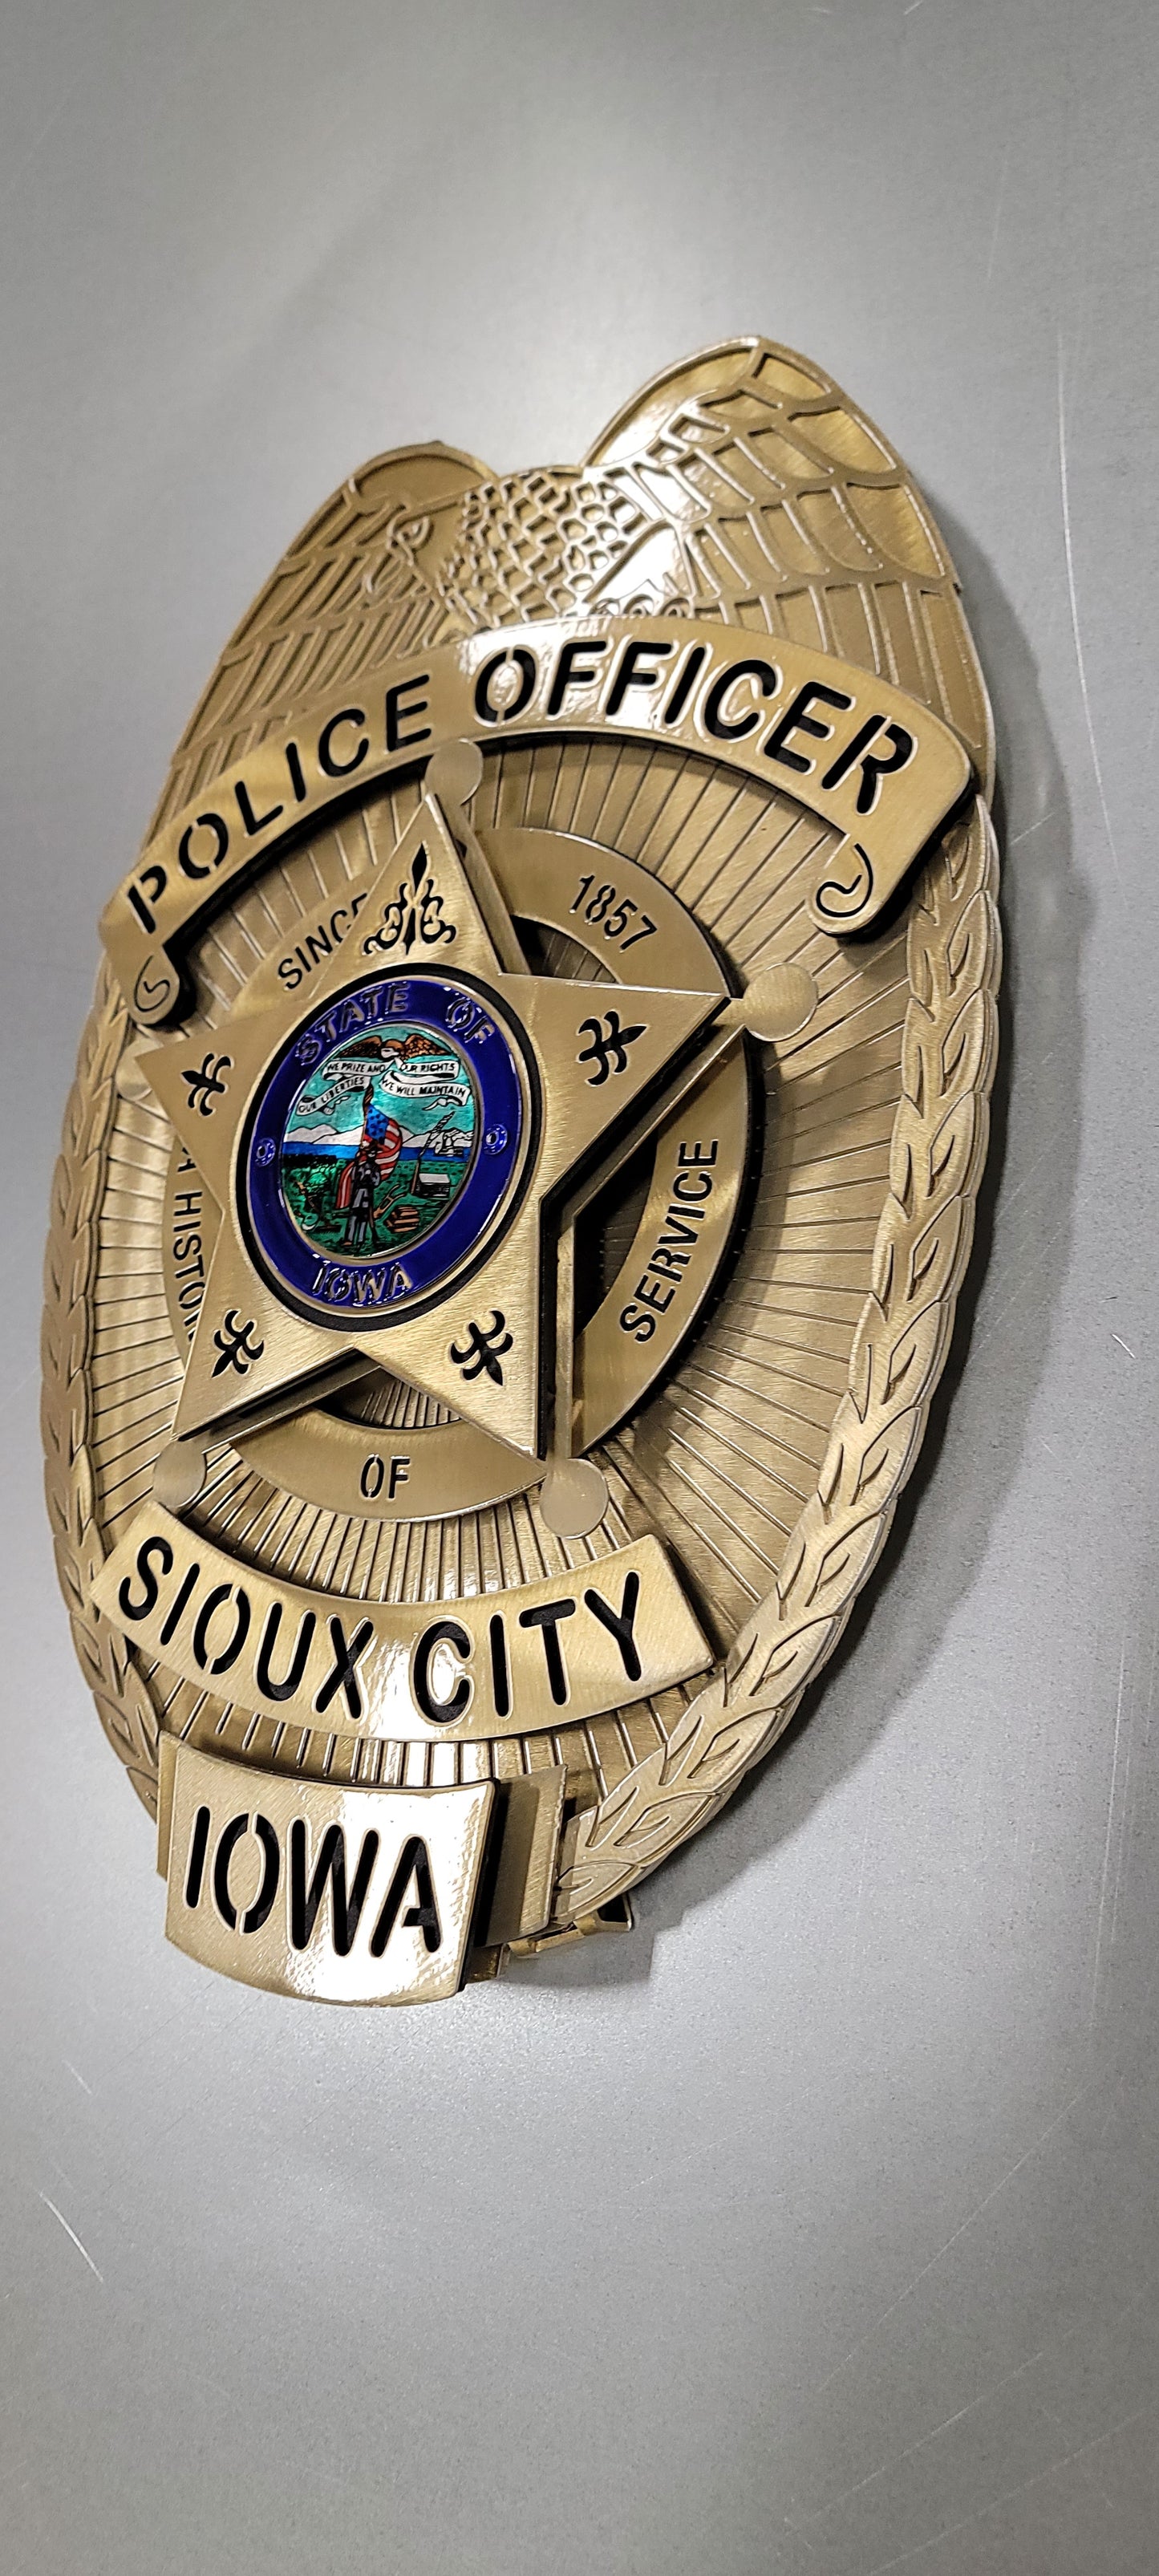 Sioux CIty Iowa Police Badge